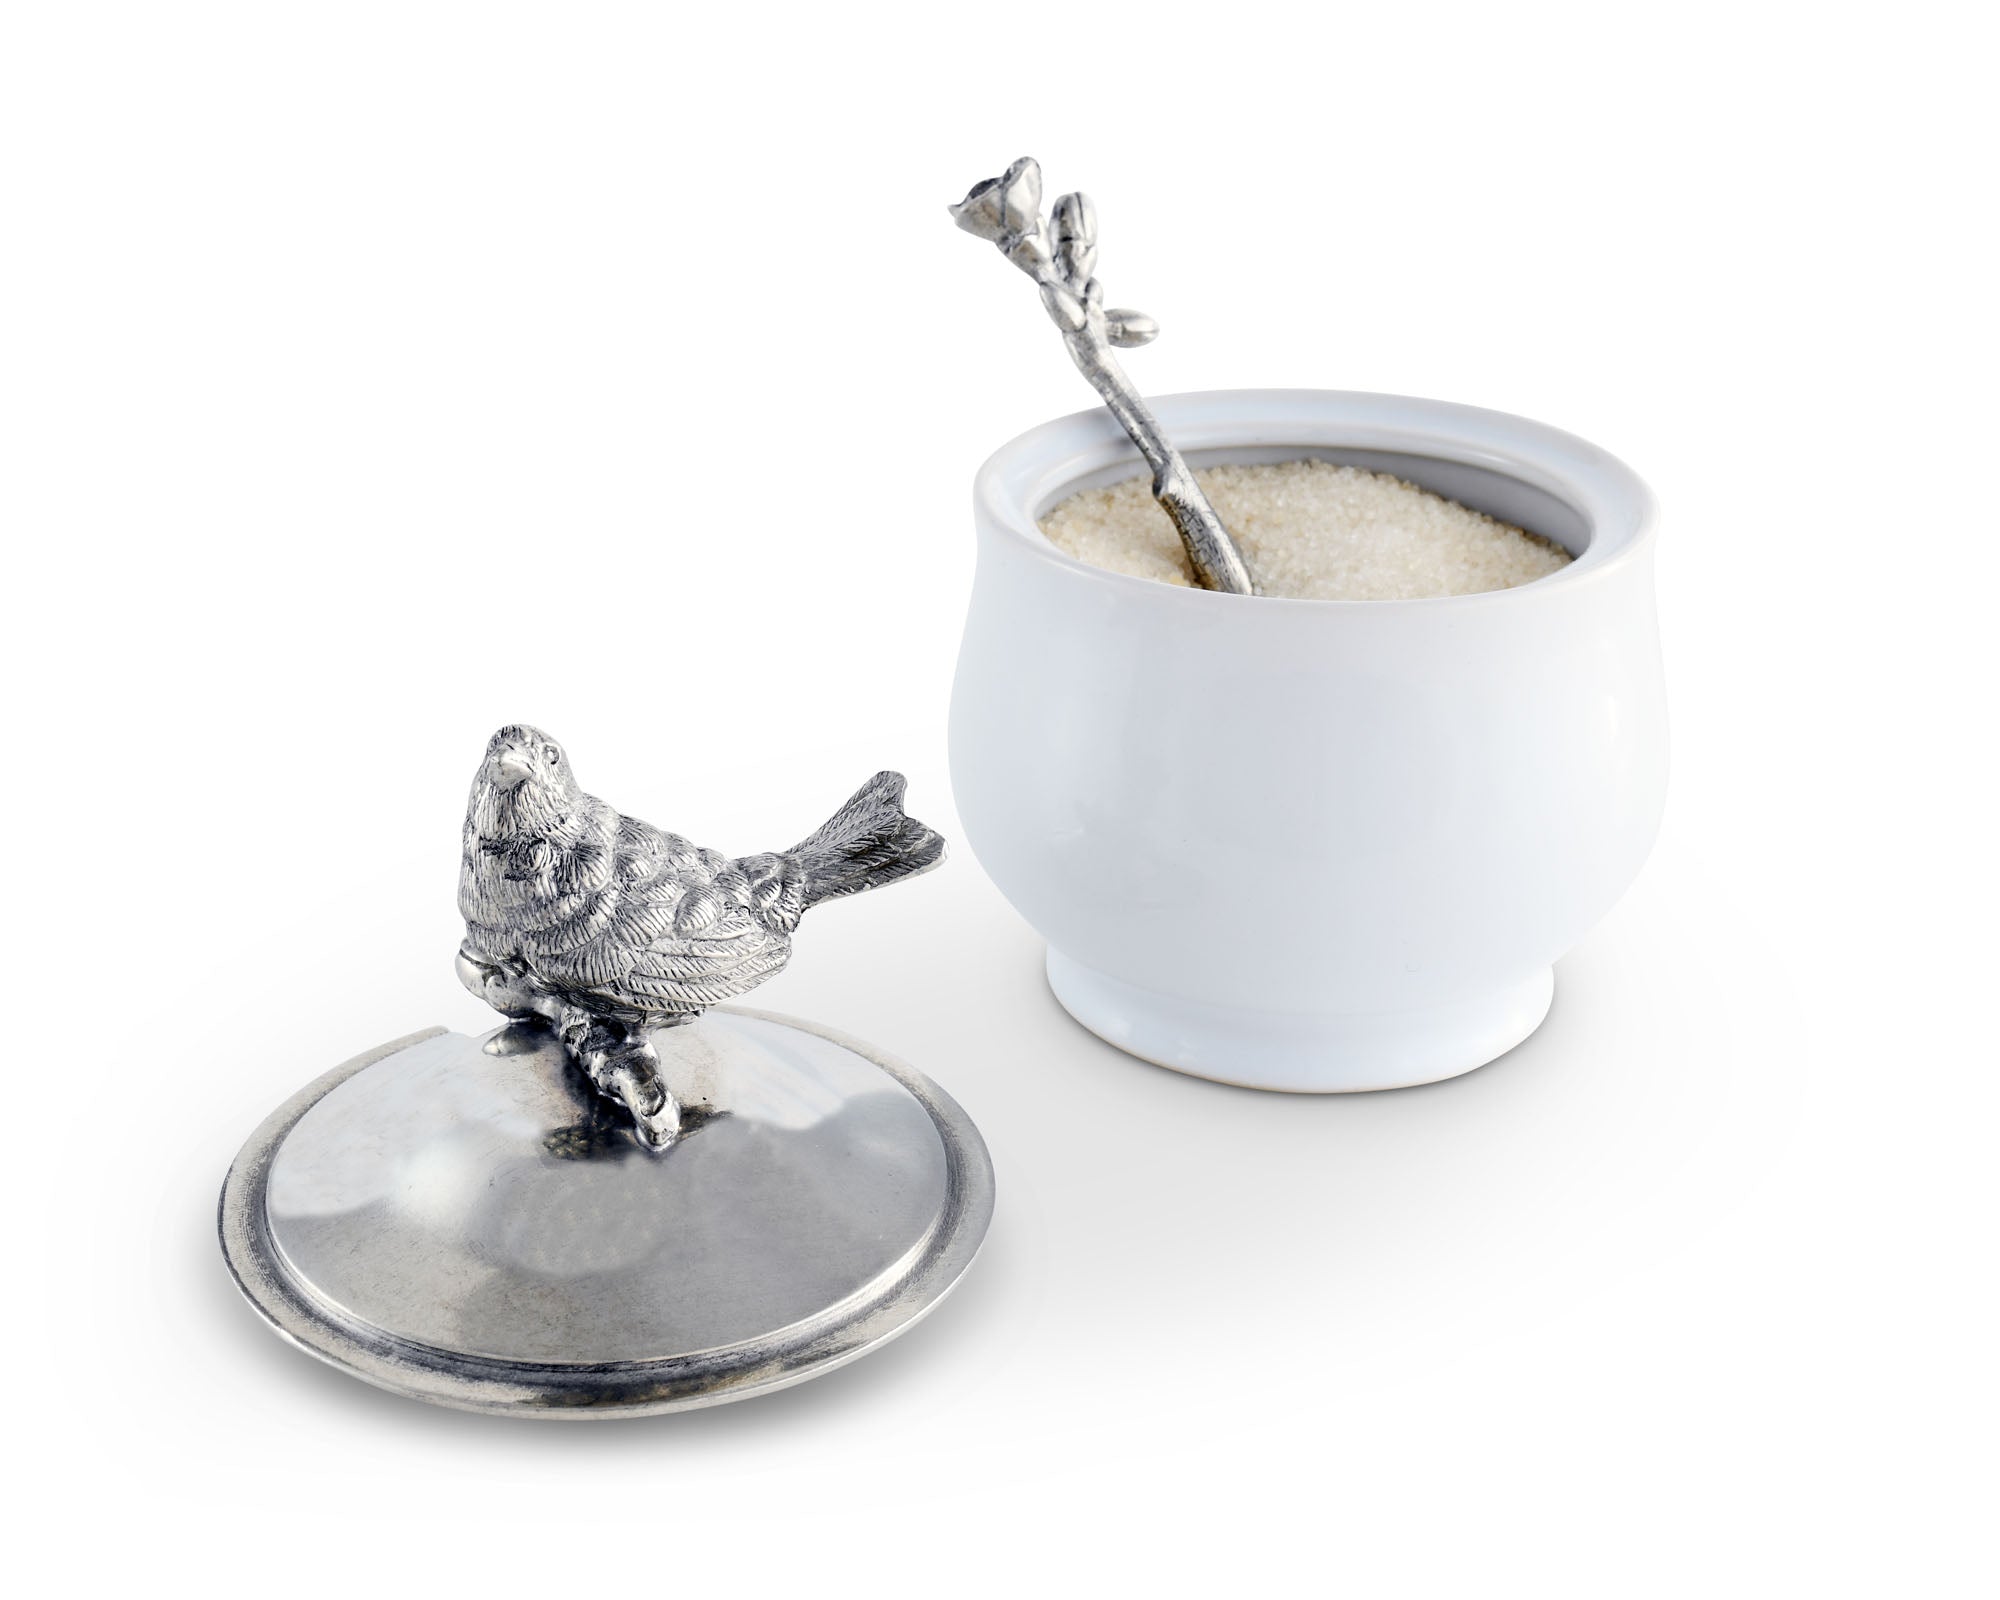 Vagabond House Song Bird Sugar Bowl and Spoon Product Image